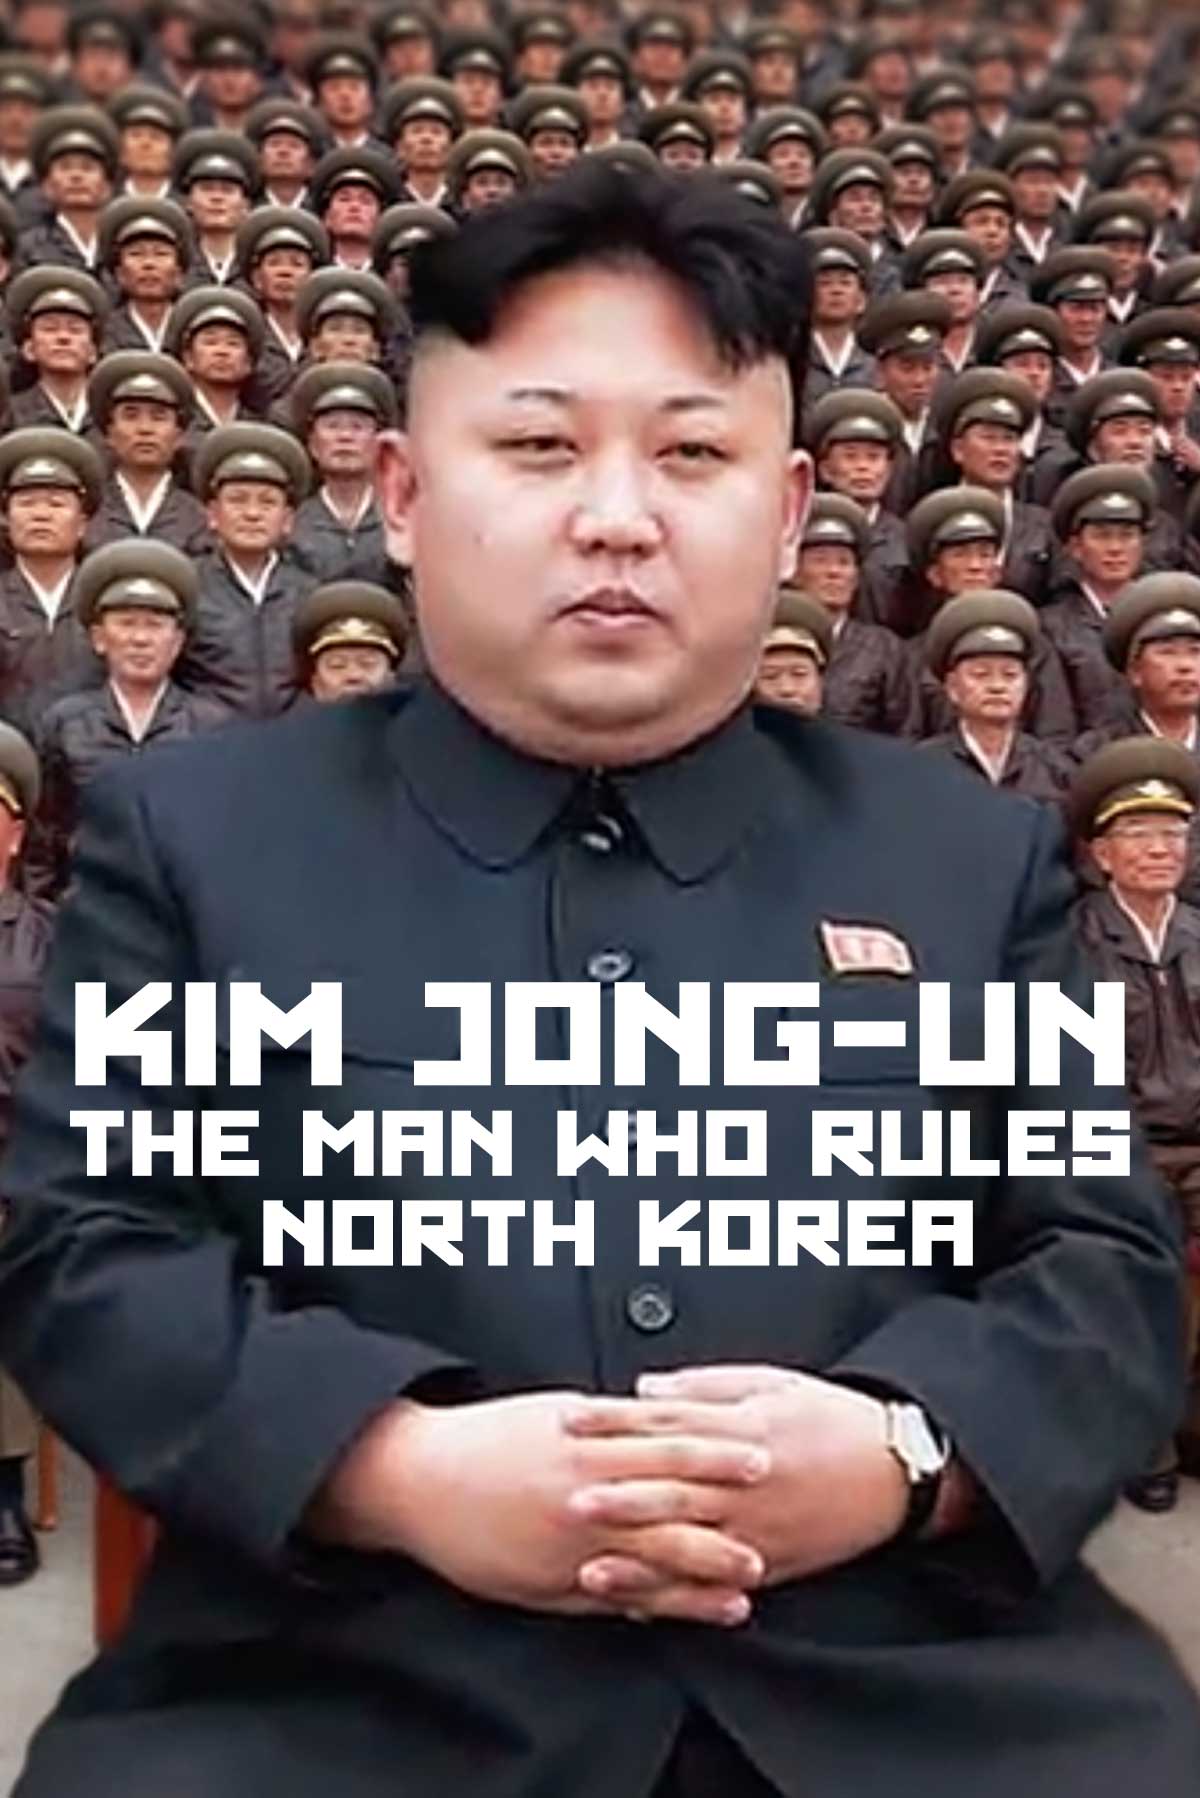 Kim Jong Un: The Man Who Rules North Korea